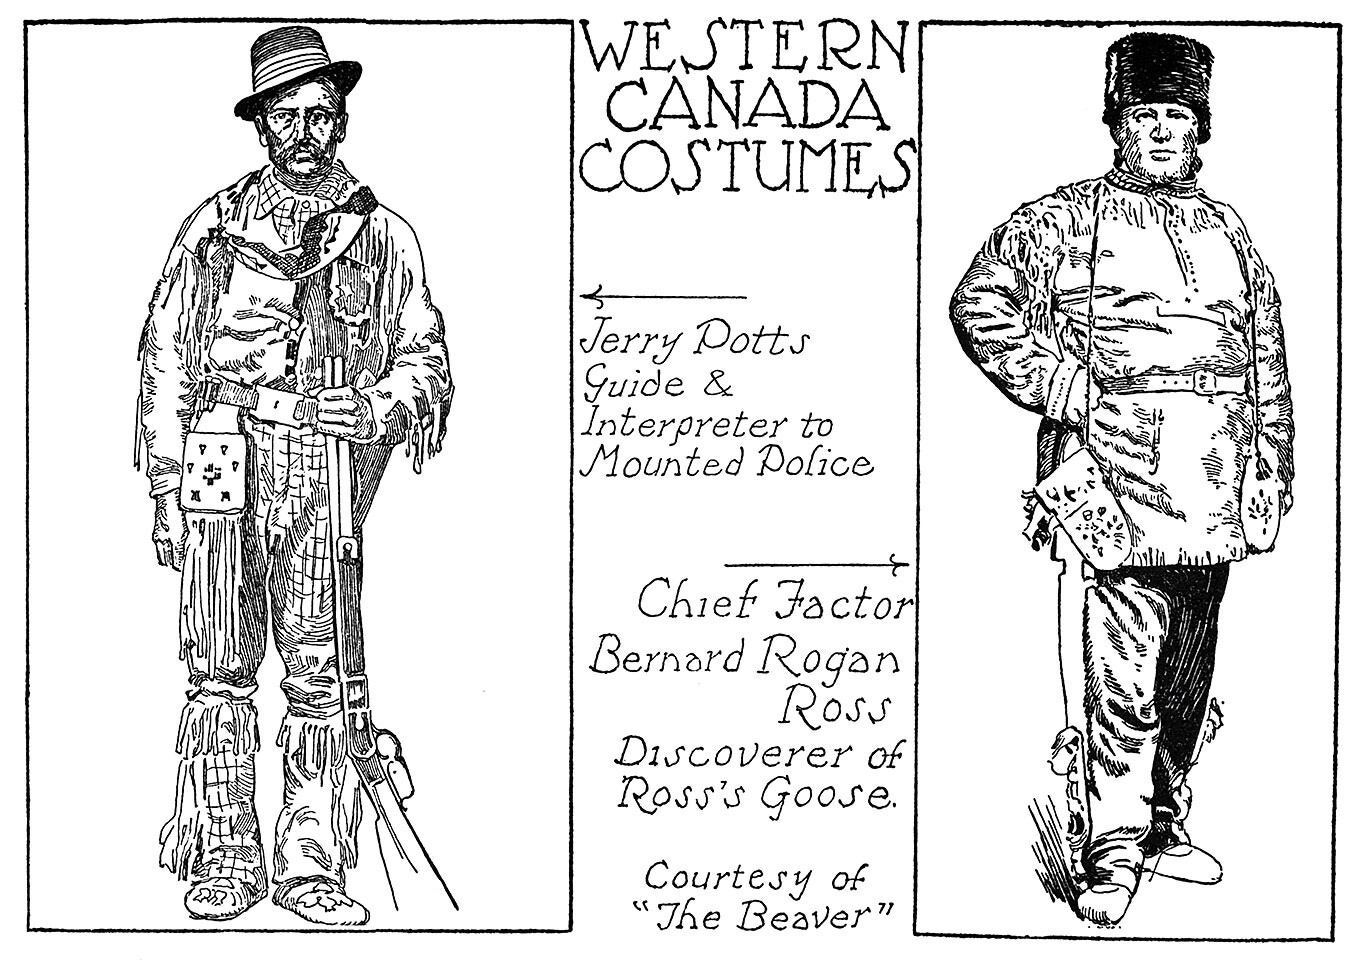 Western Canada Costumes